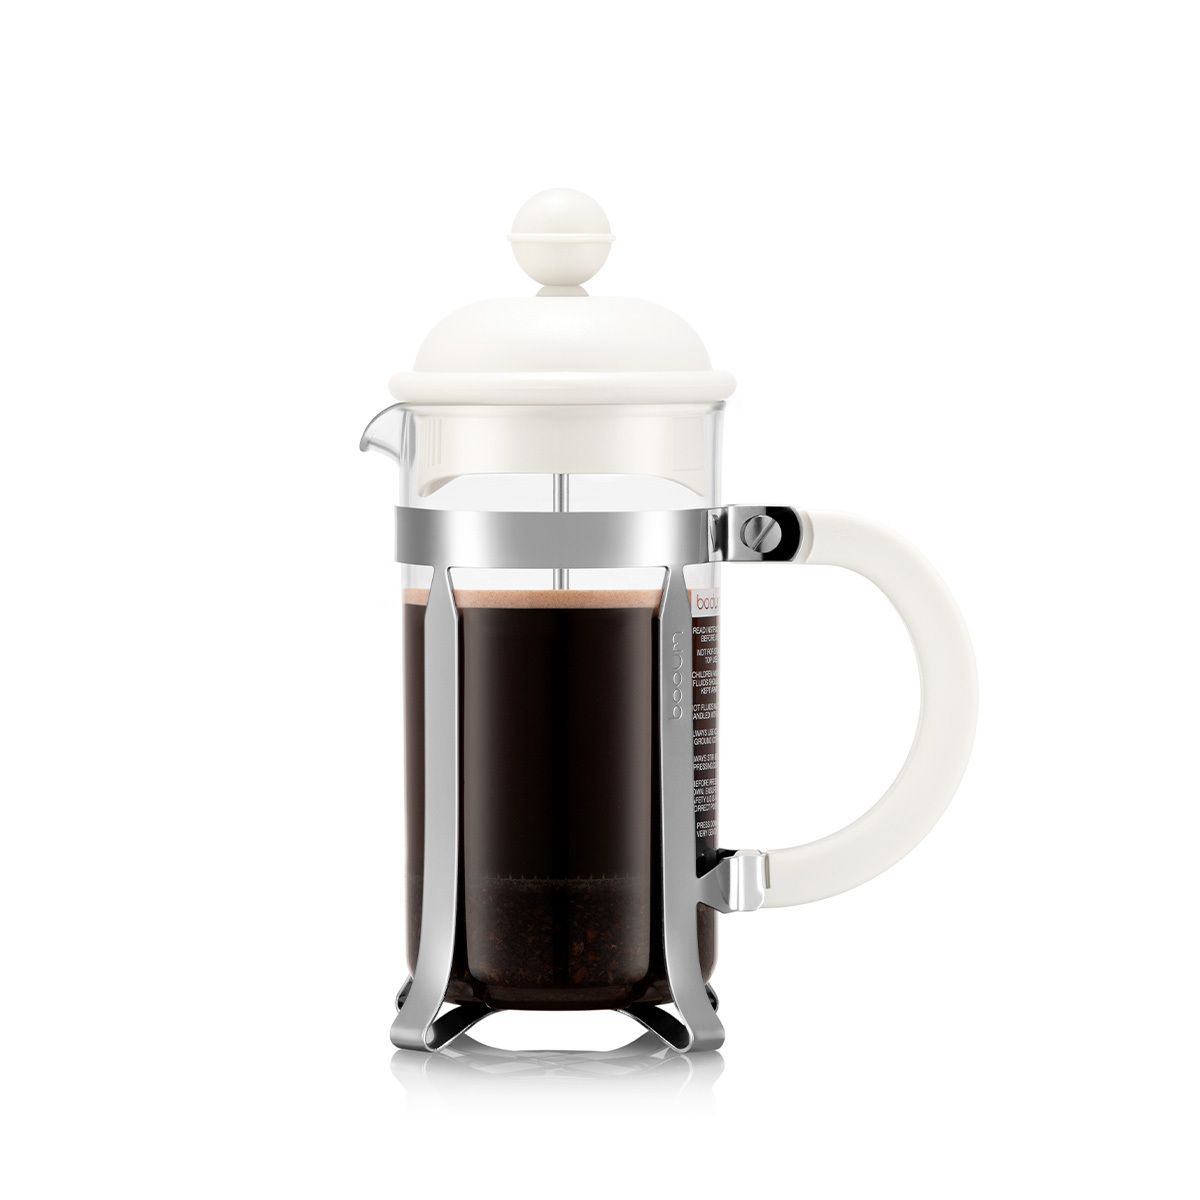 Bodum Caffettiera French Press Durable BPA Free Coffee Maker 34 Ounce White  New